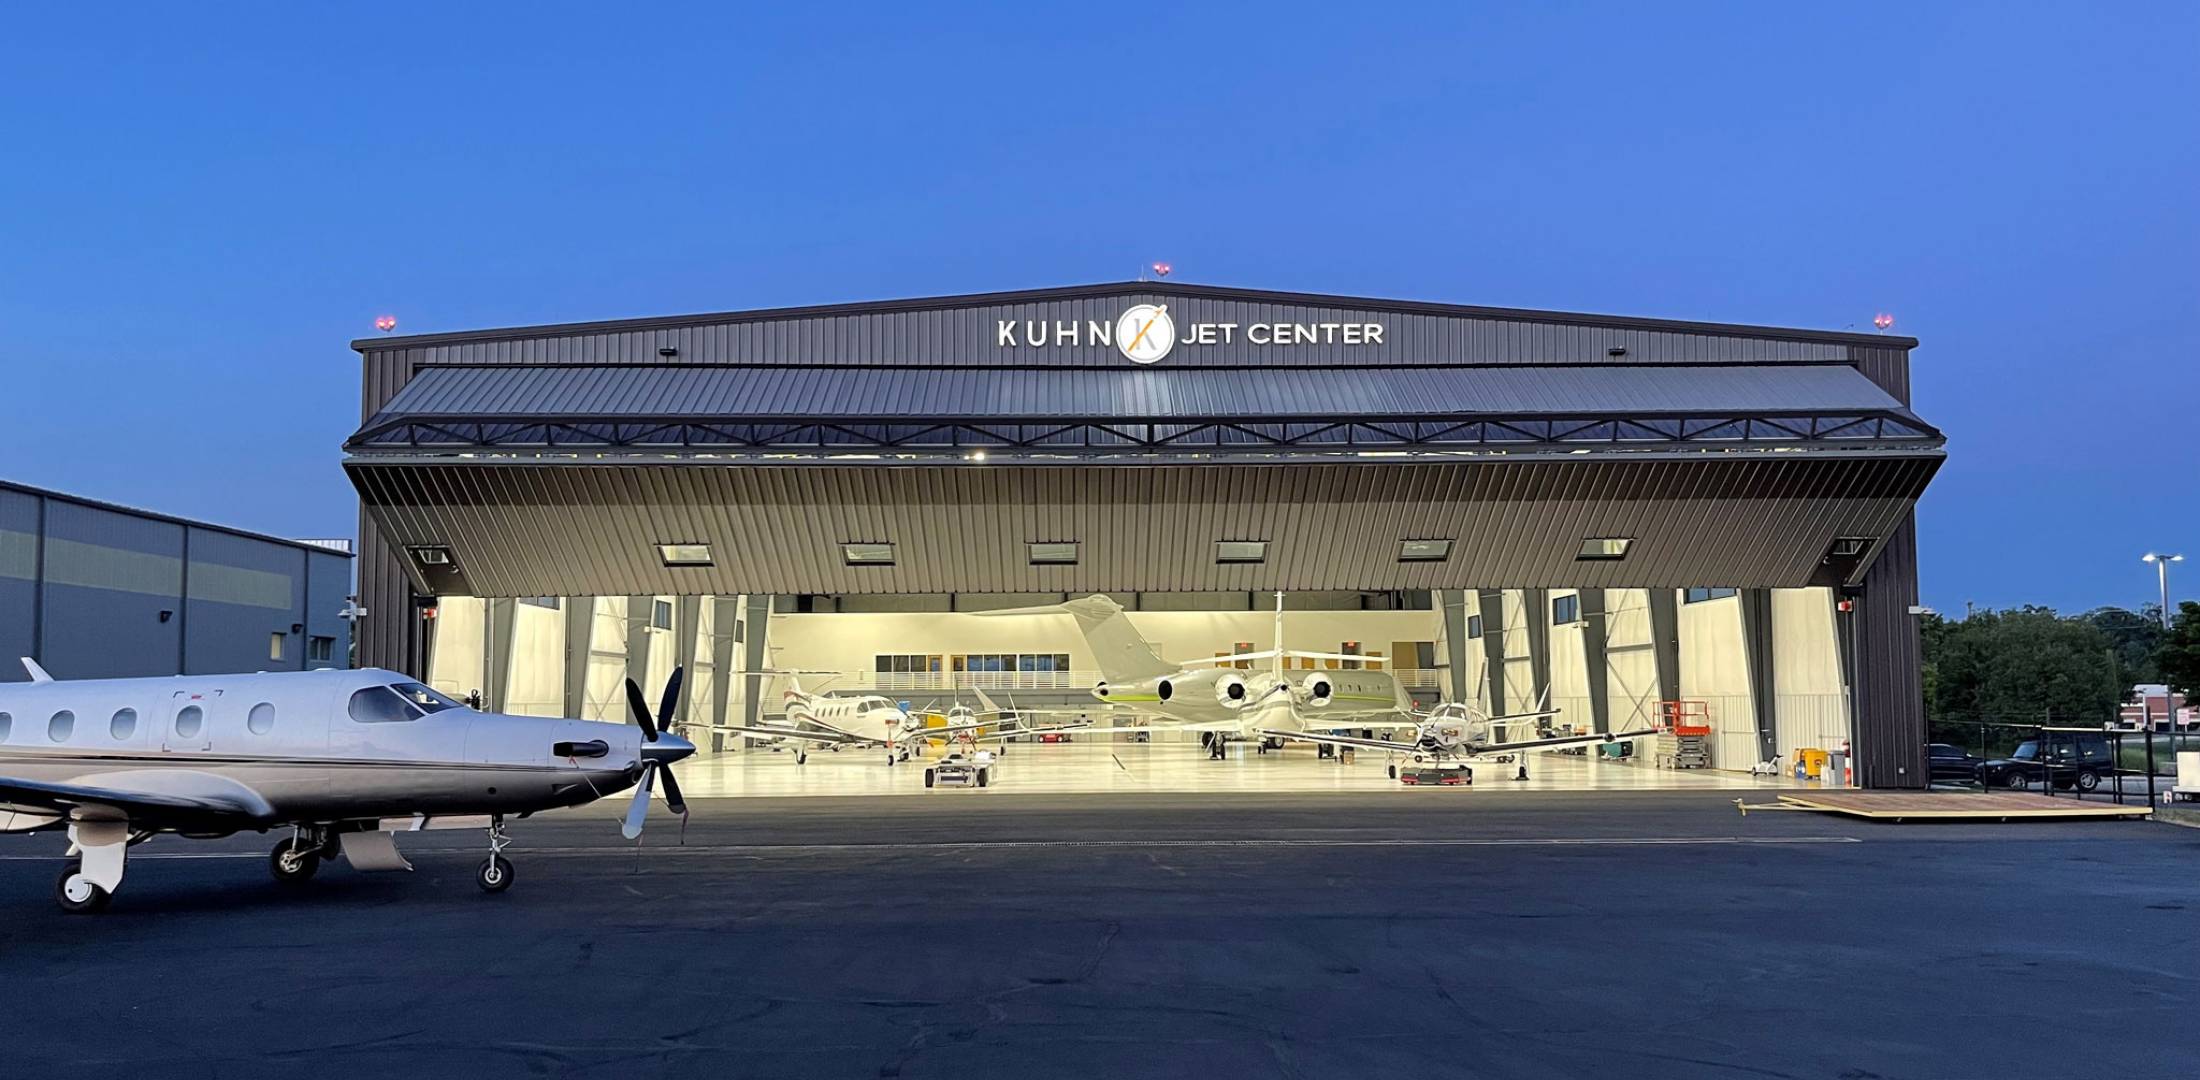 Kuhn Jet Center hangar at Leesburg Executive Airport illuminated at night with business aircraft parked inside